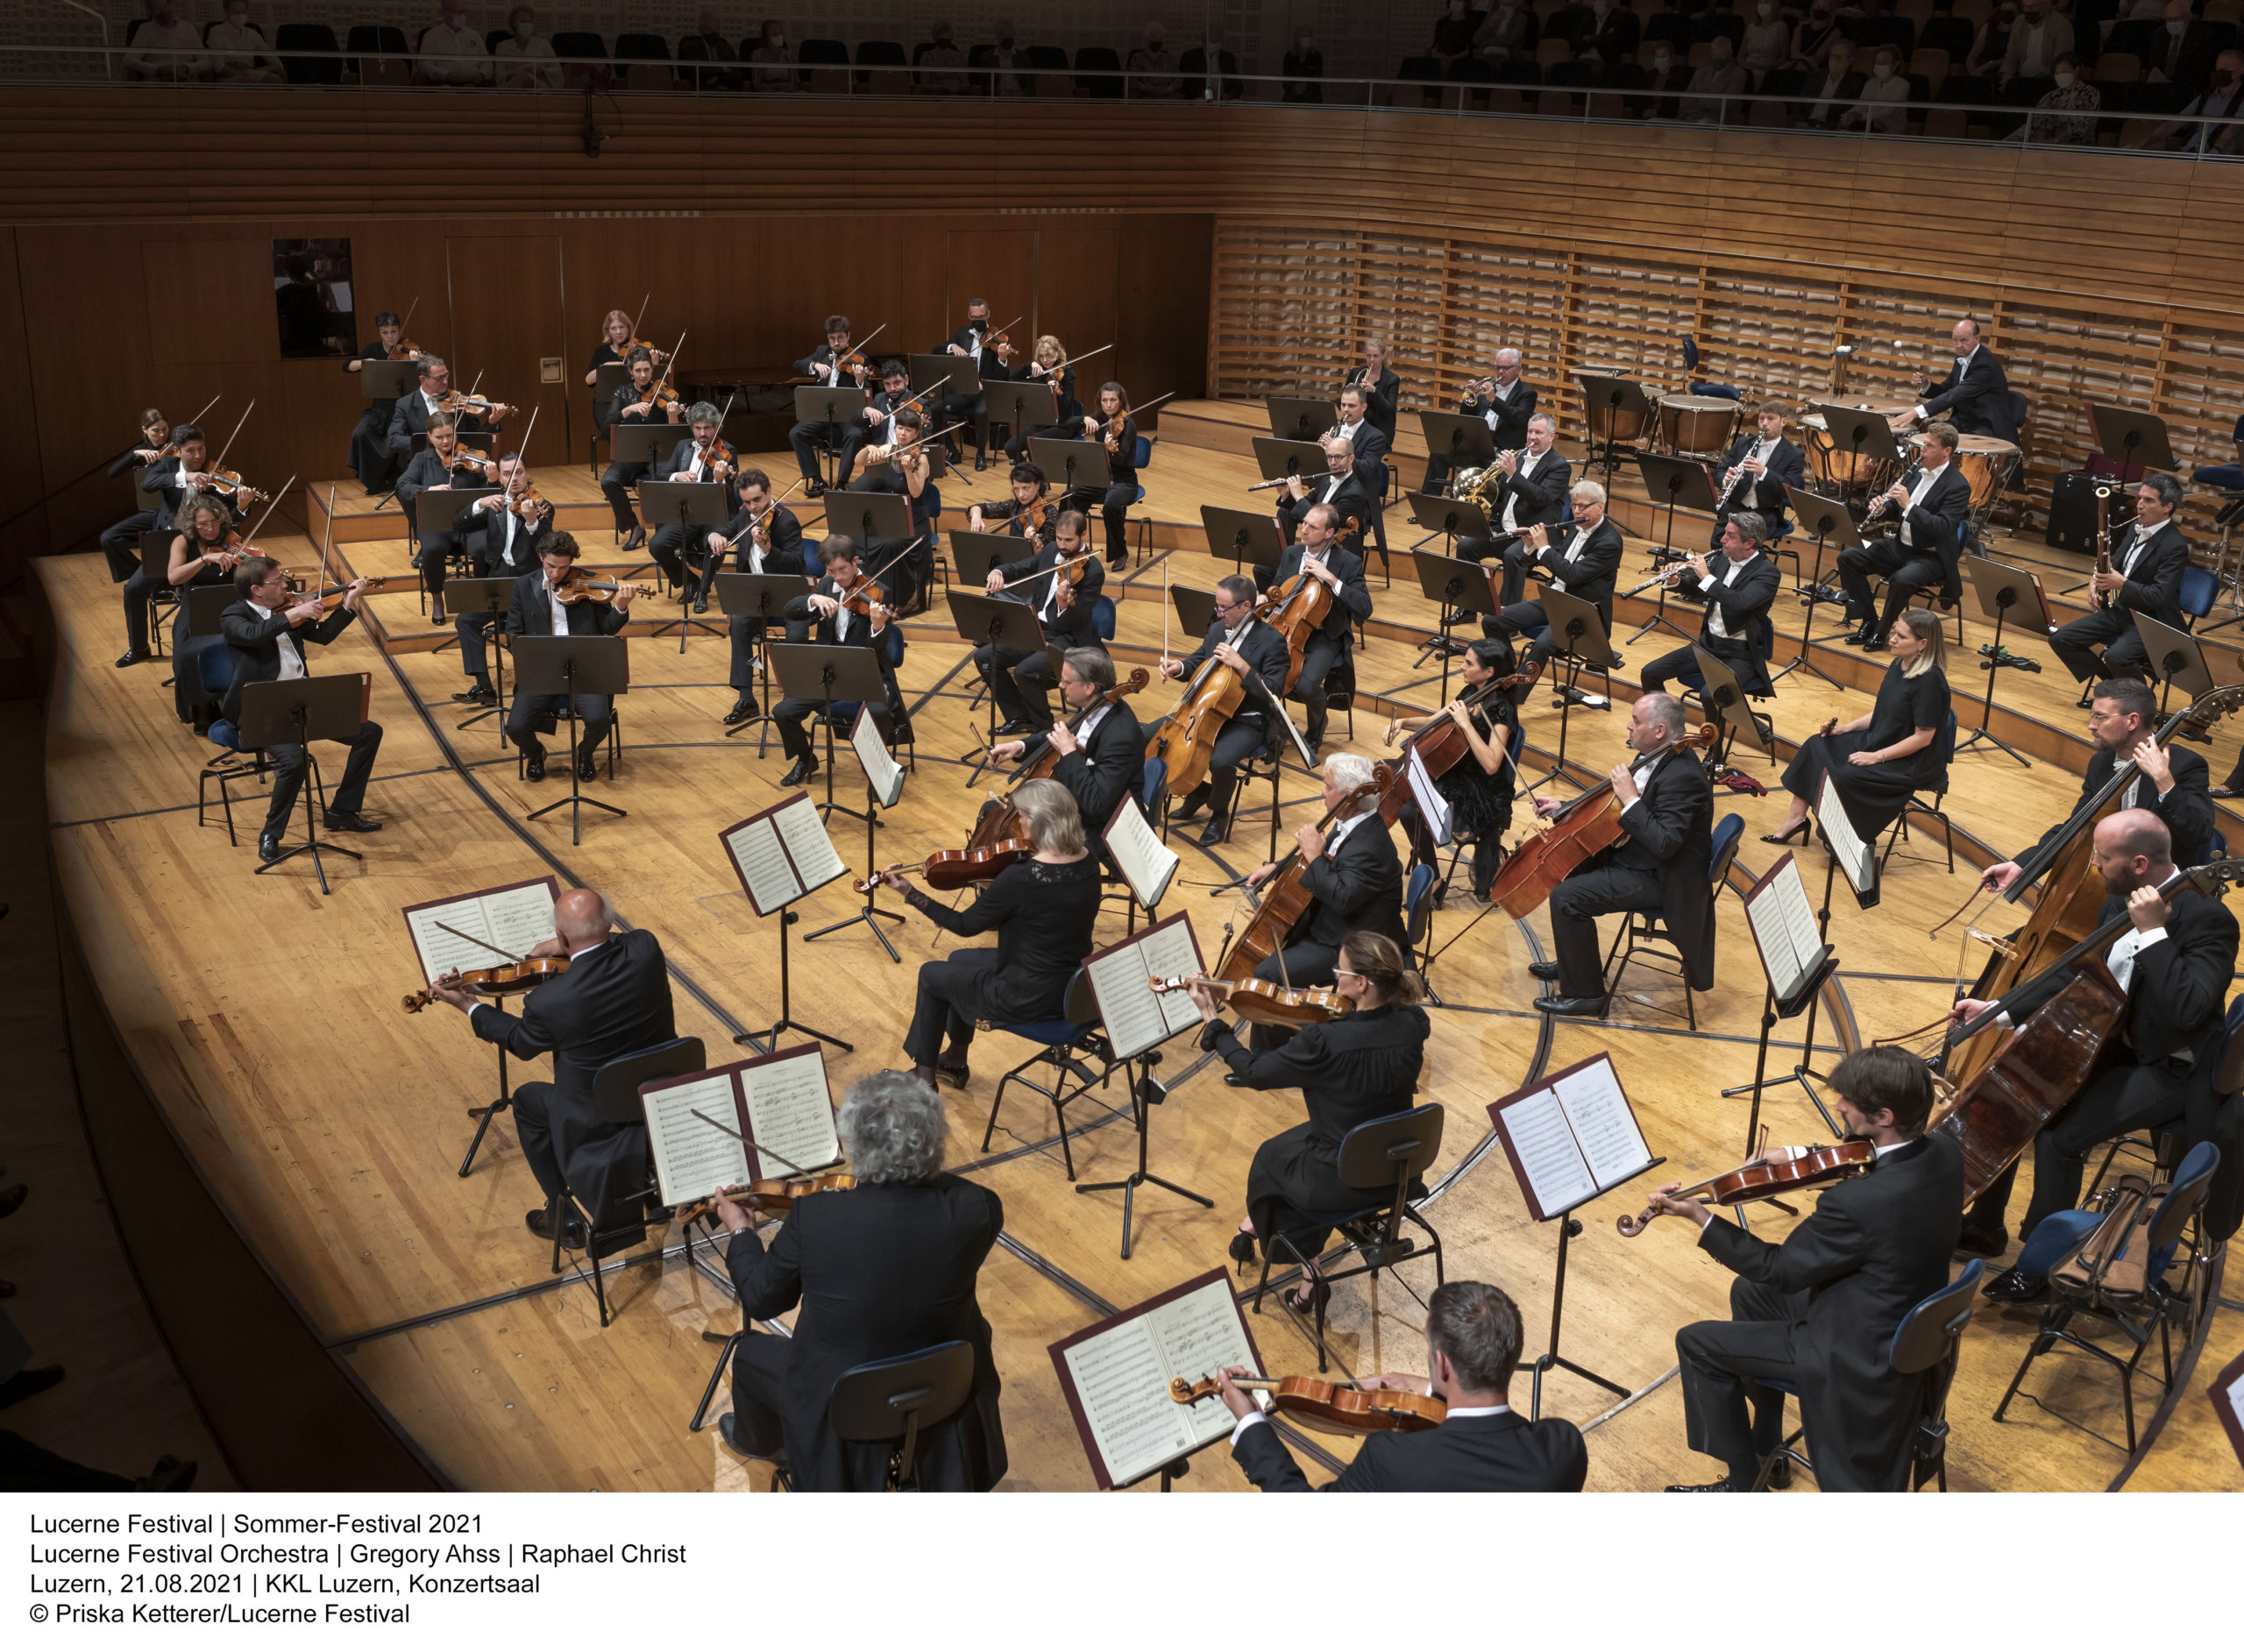 Lucerne Festival Orchestra 6